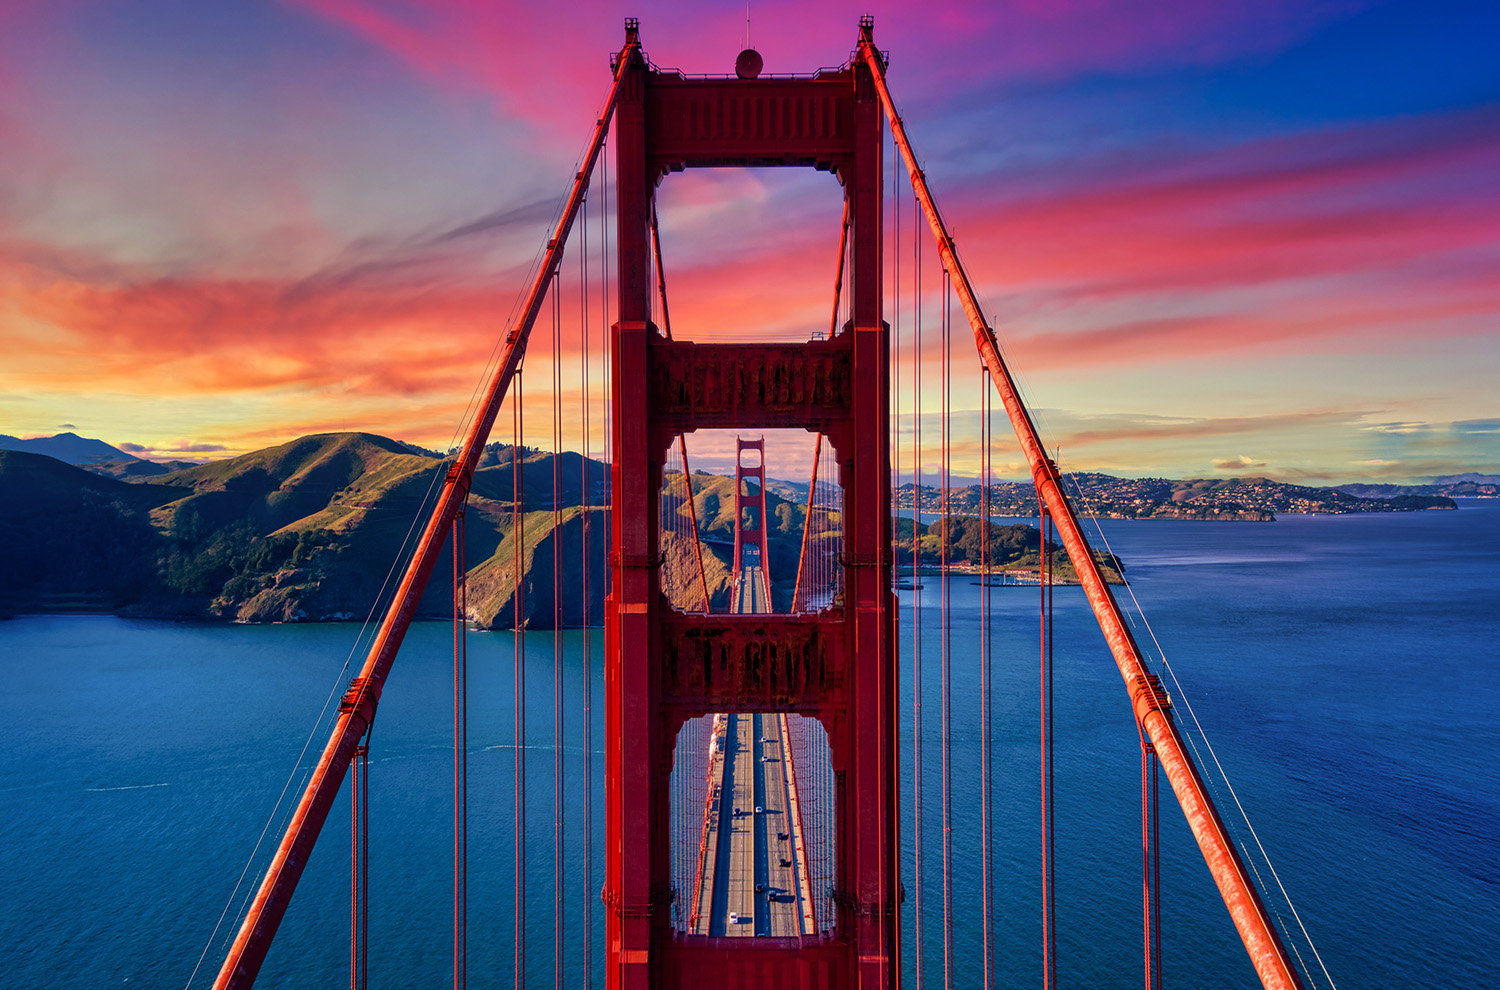 Image of View of the Golden Gate Bridge by Venti Views via Unsplash